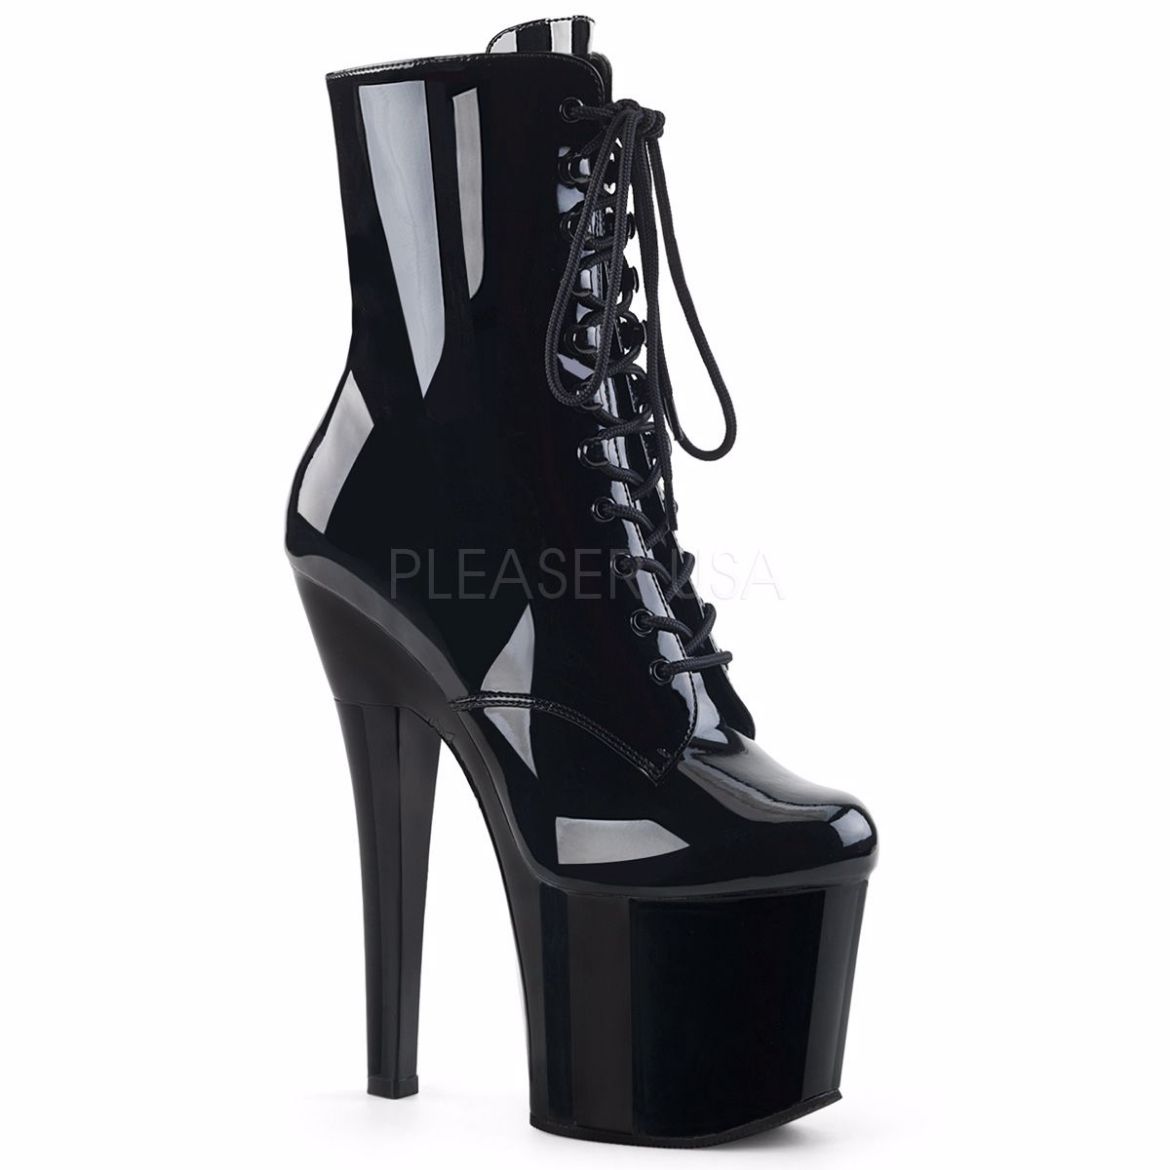 Product image of Pleaser Radiant-1020 Black Patent/Black, 7 inch (17.8 cm) Heel, 3 1/4 inch (8.3 cm) Platform Ankle Boot